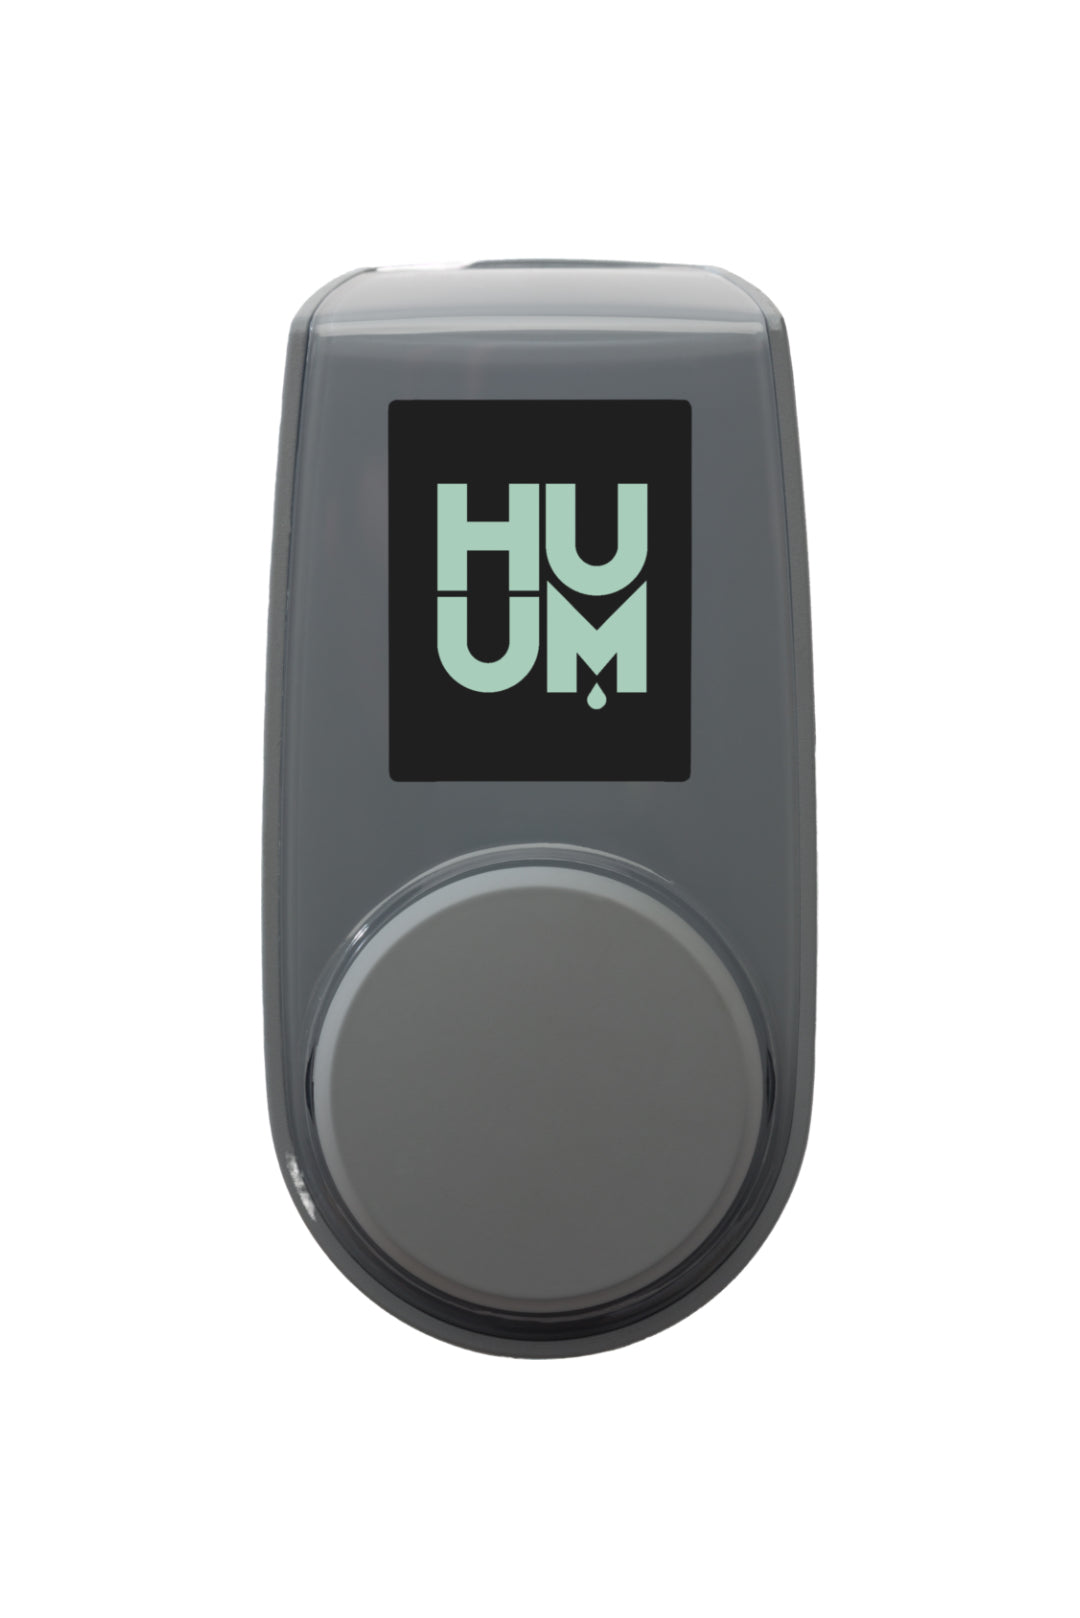 HUUM sauna control unit wifi in grey color